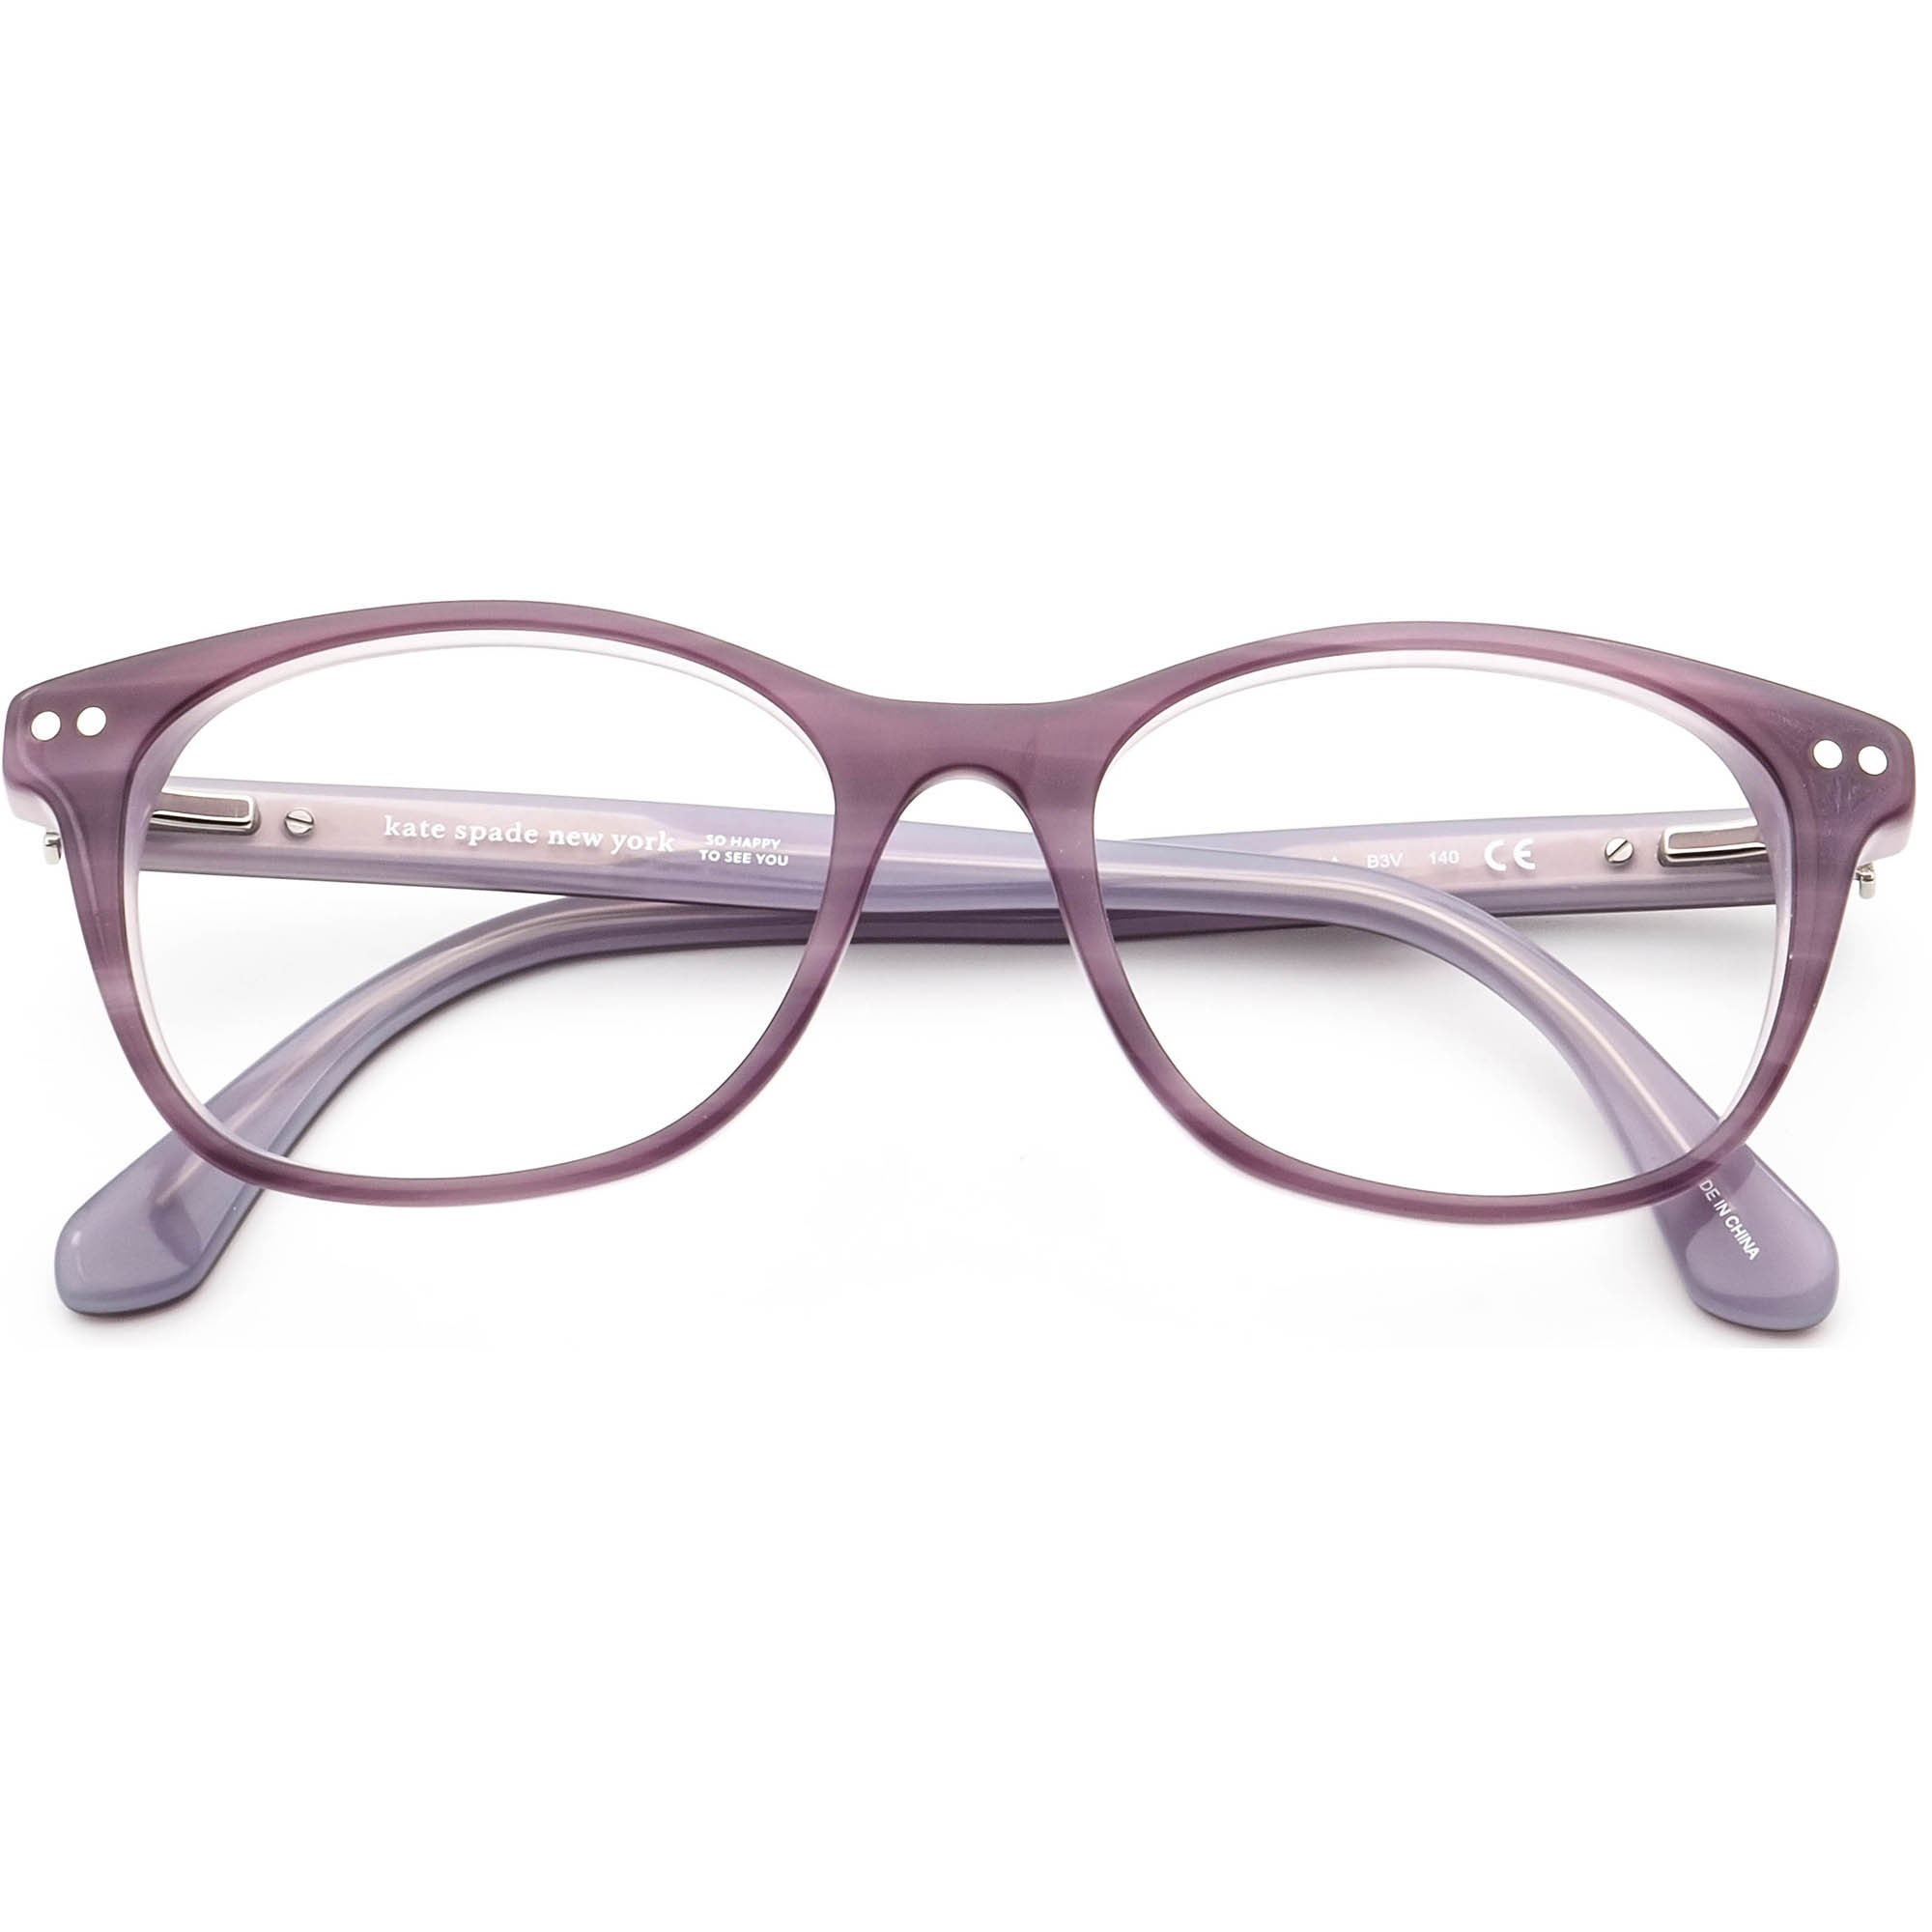 Buy Kate Spade Women's Eyeglasses Kamila B3V Purple Online in India - Etsy